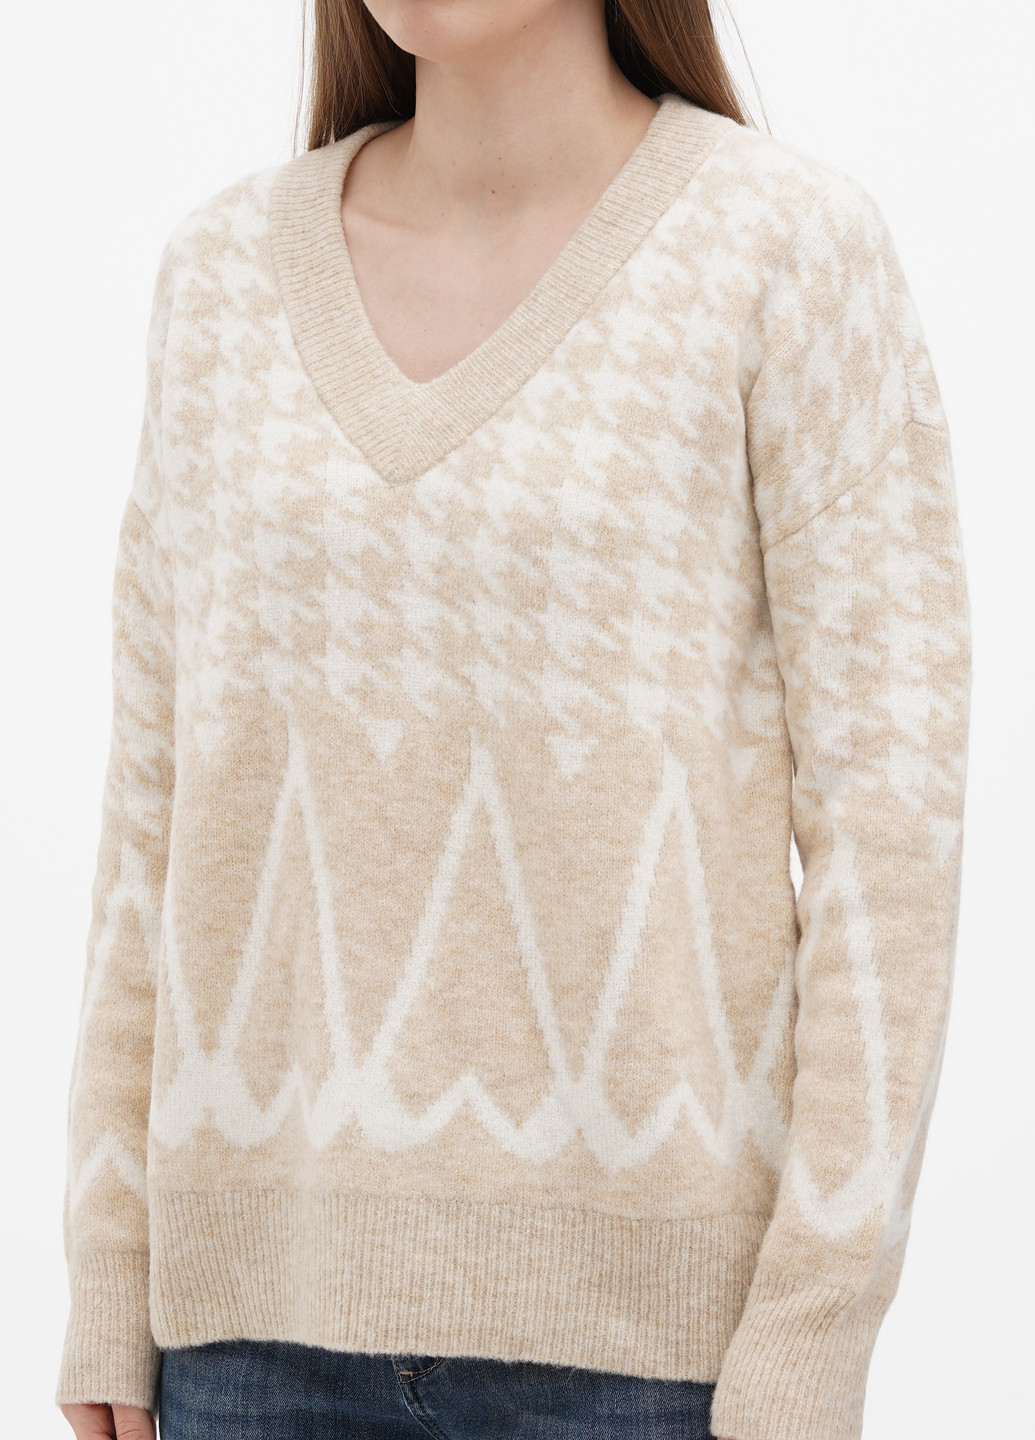 Бежевый демисезонный пуловер пуловер Comma